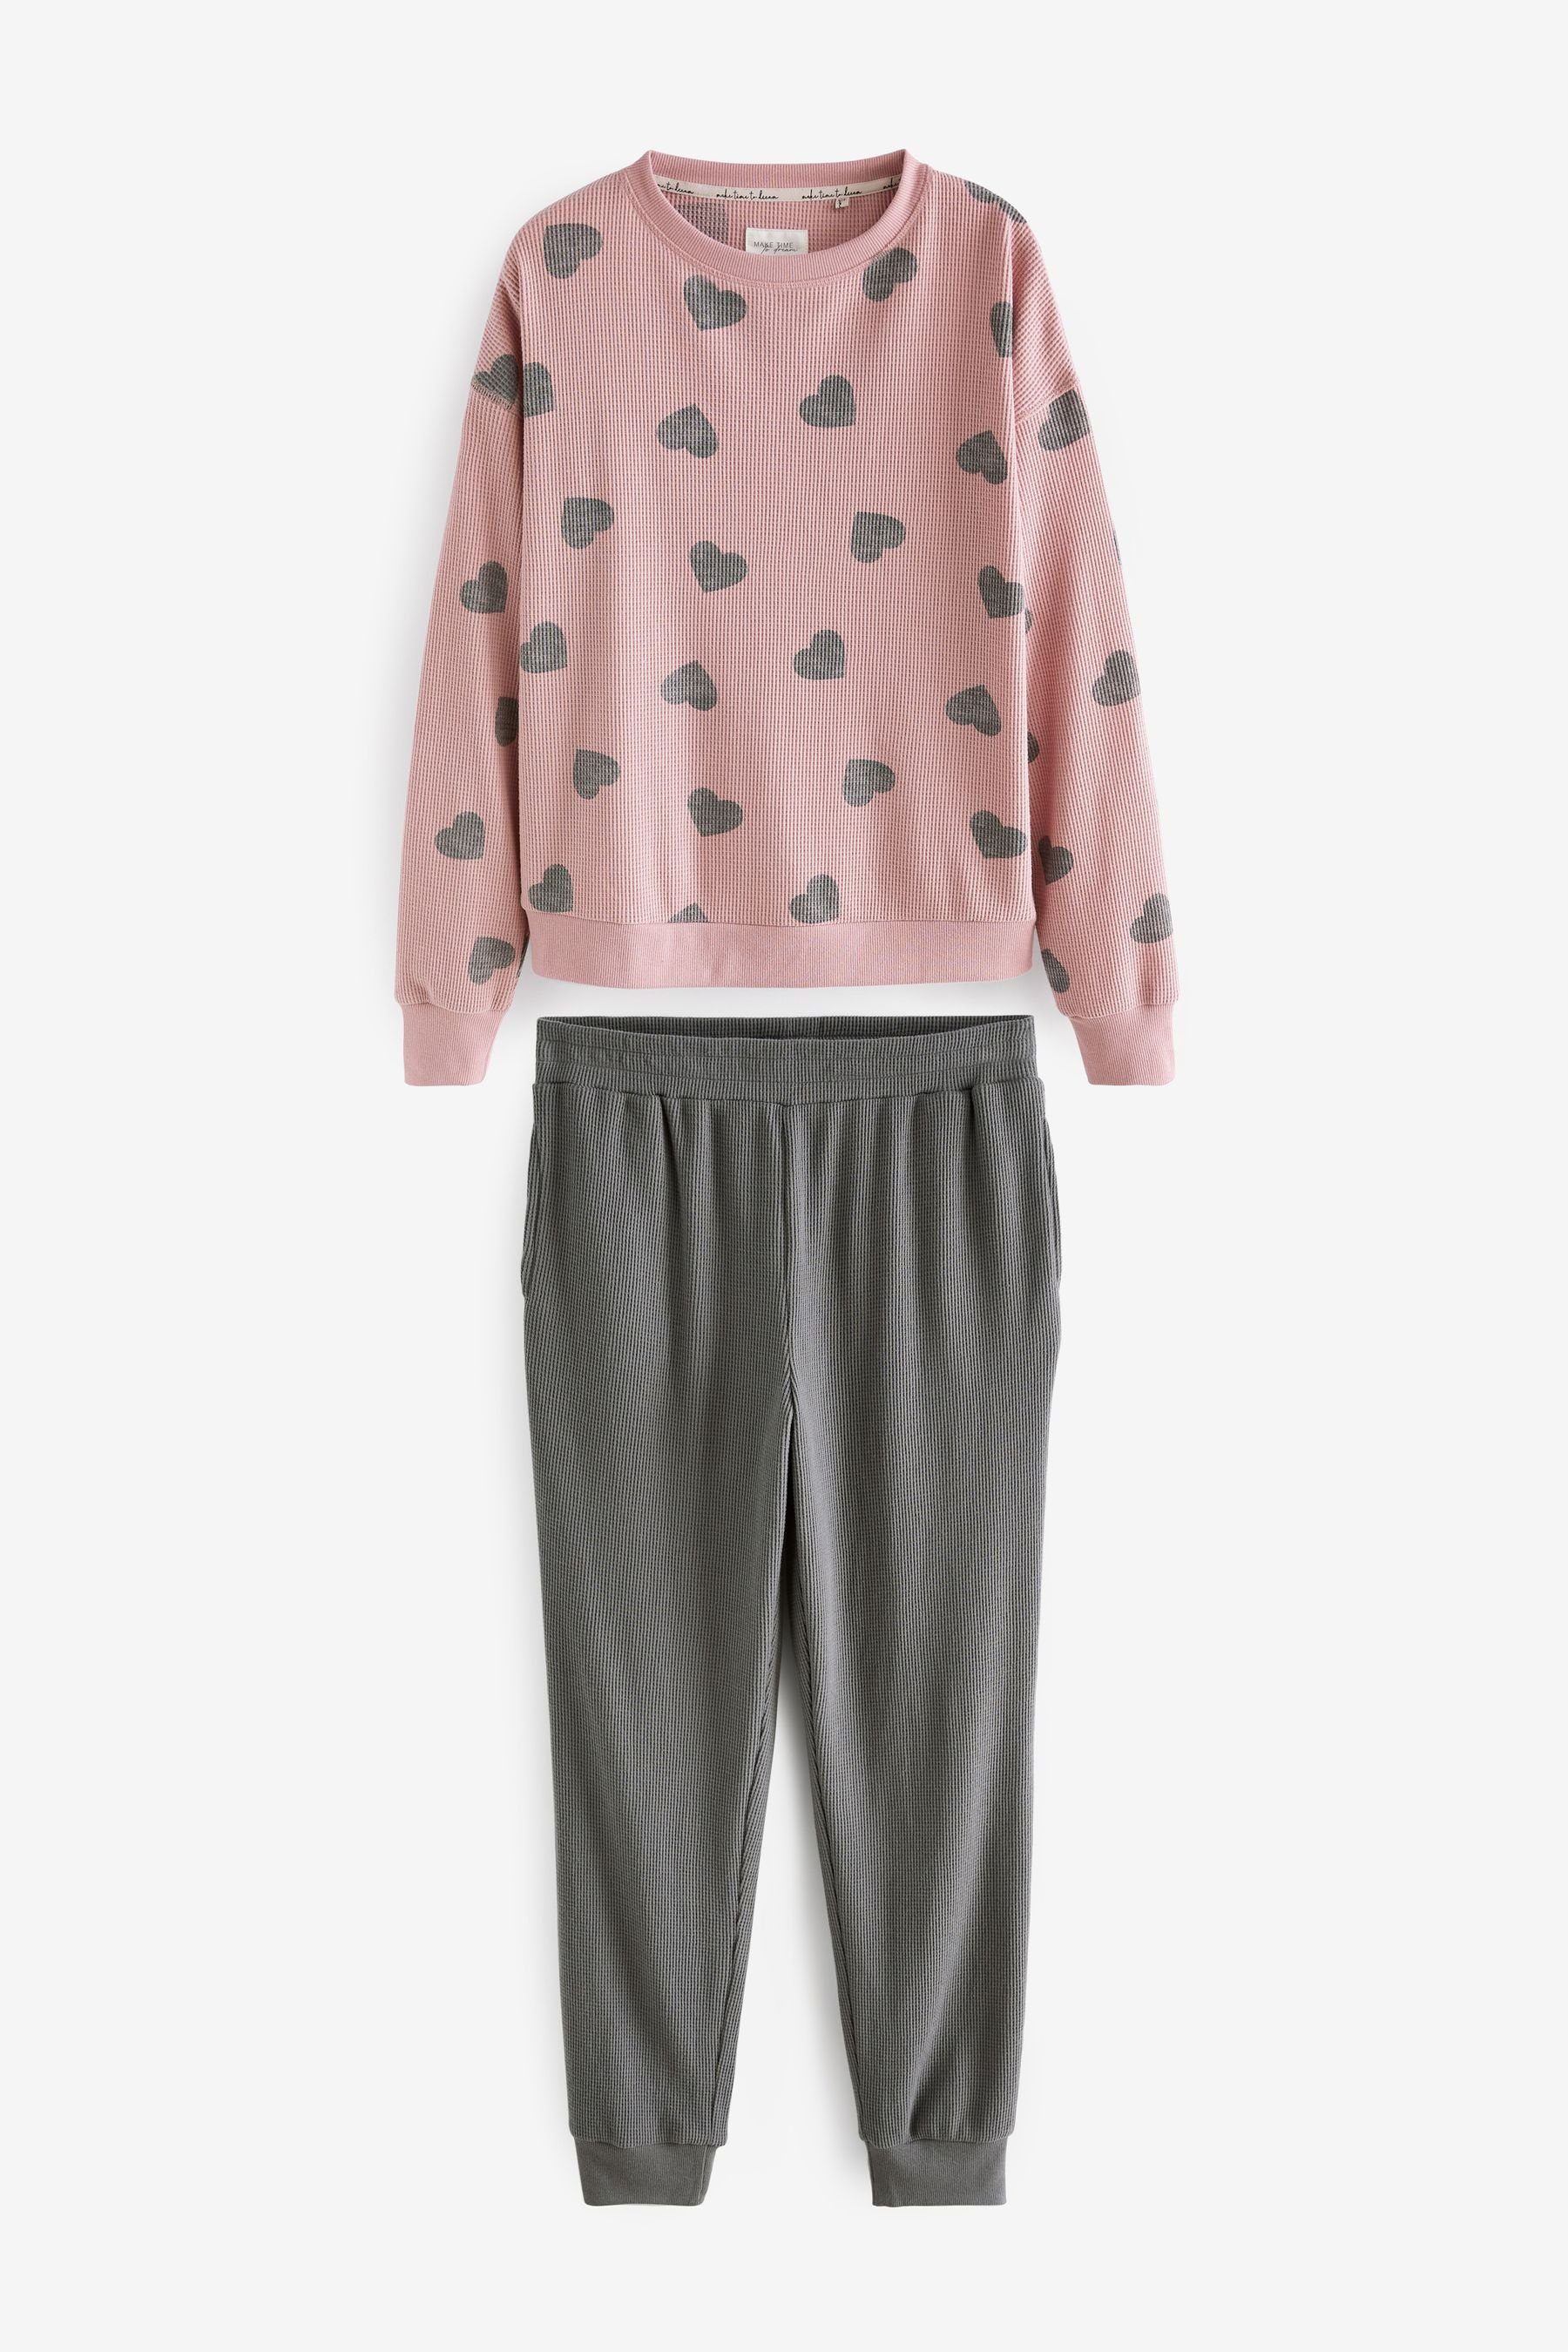 Next Pyjama Langarm-Schlafanzug mit Waffelstruktur (2 tlg)